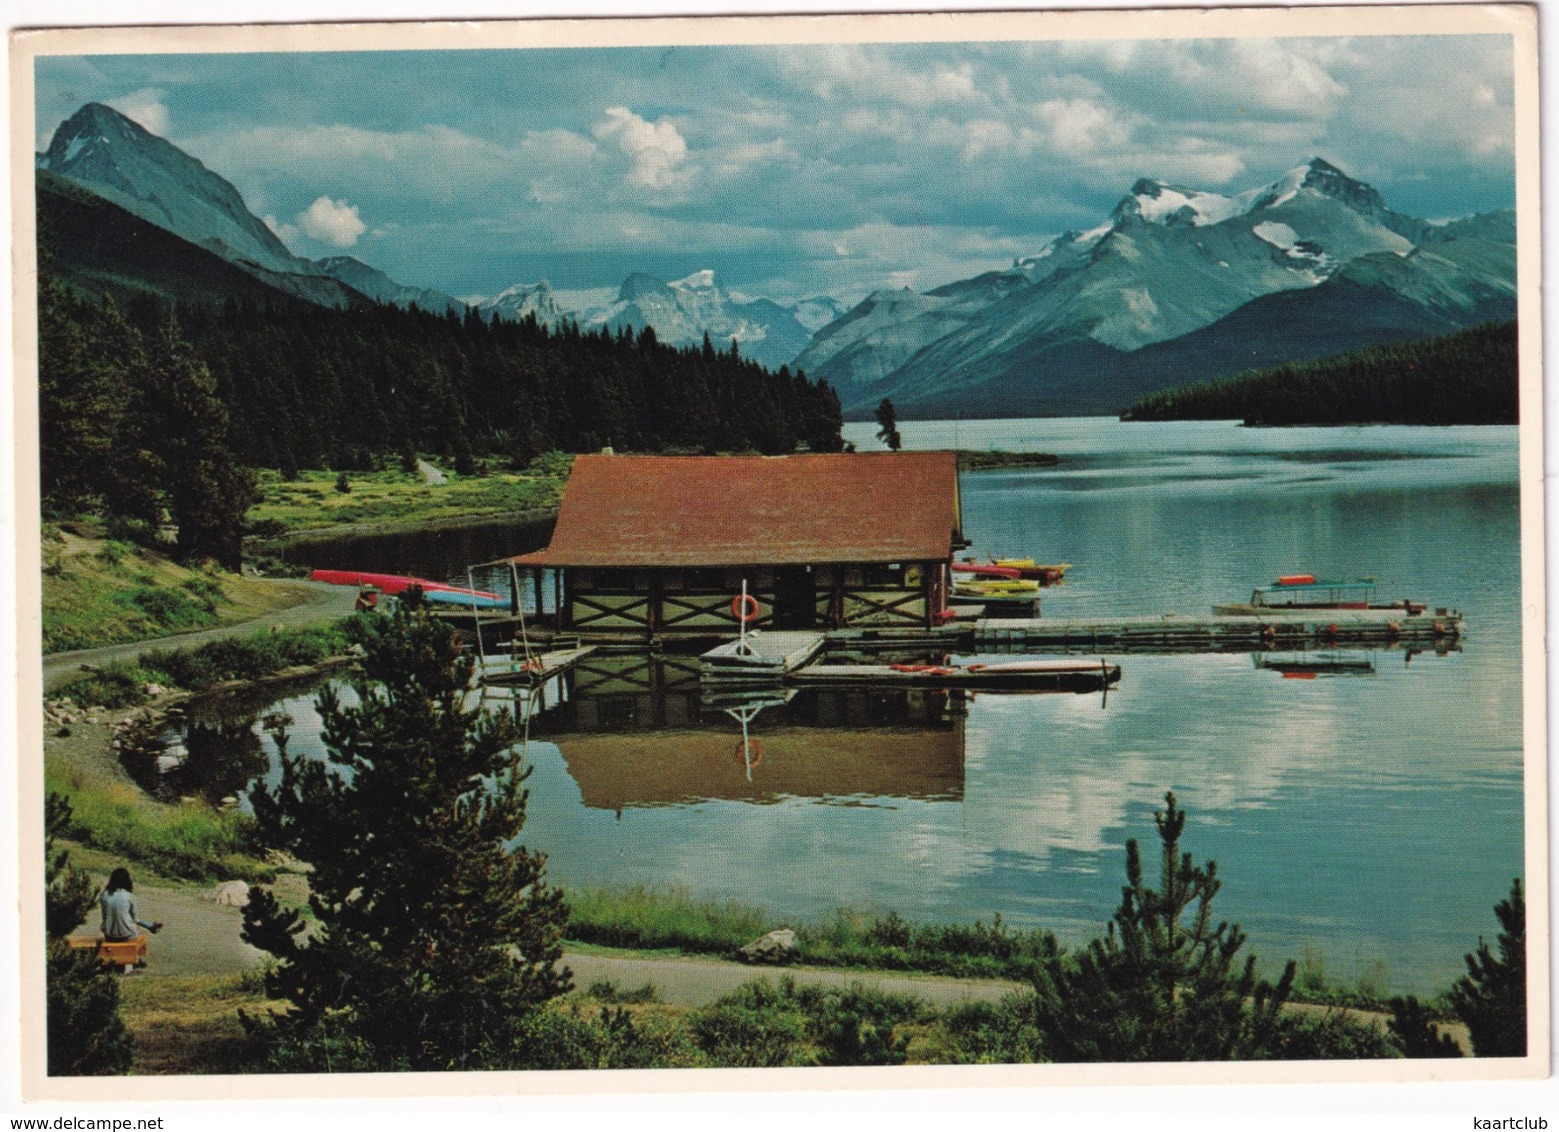 Maligne Lake, Jasper National Park - Boathouse  - (Canada) - Jasper